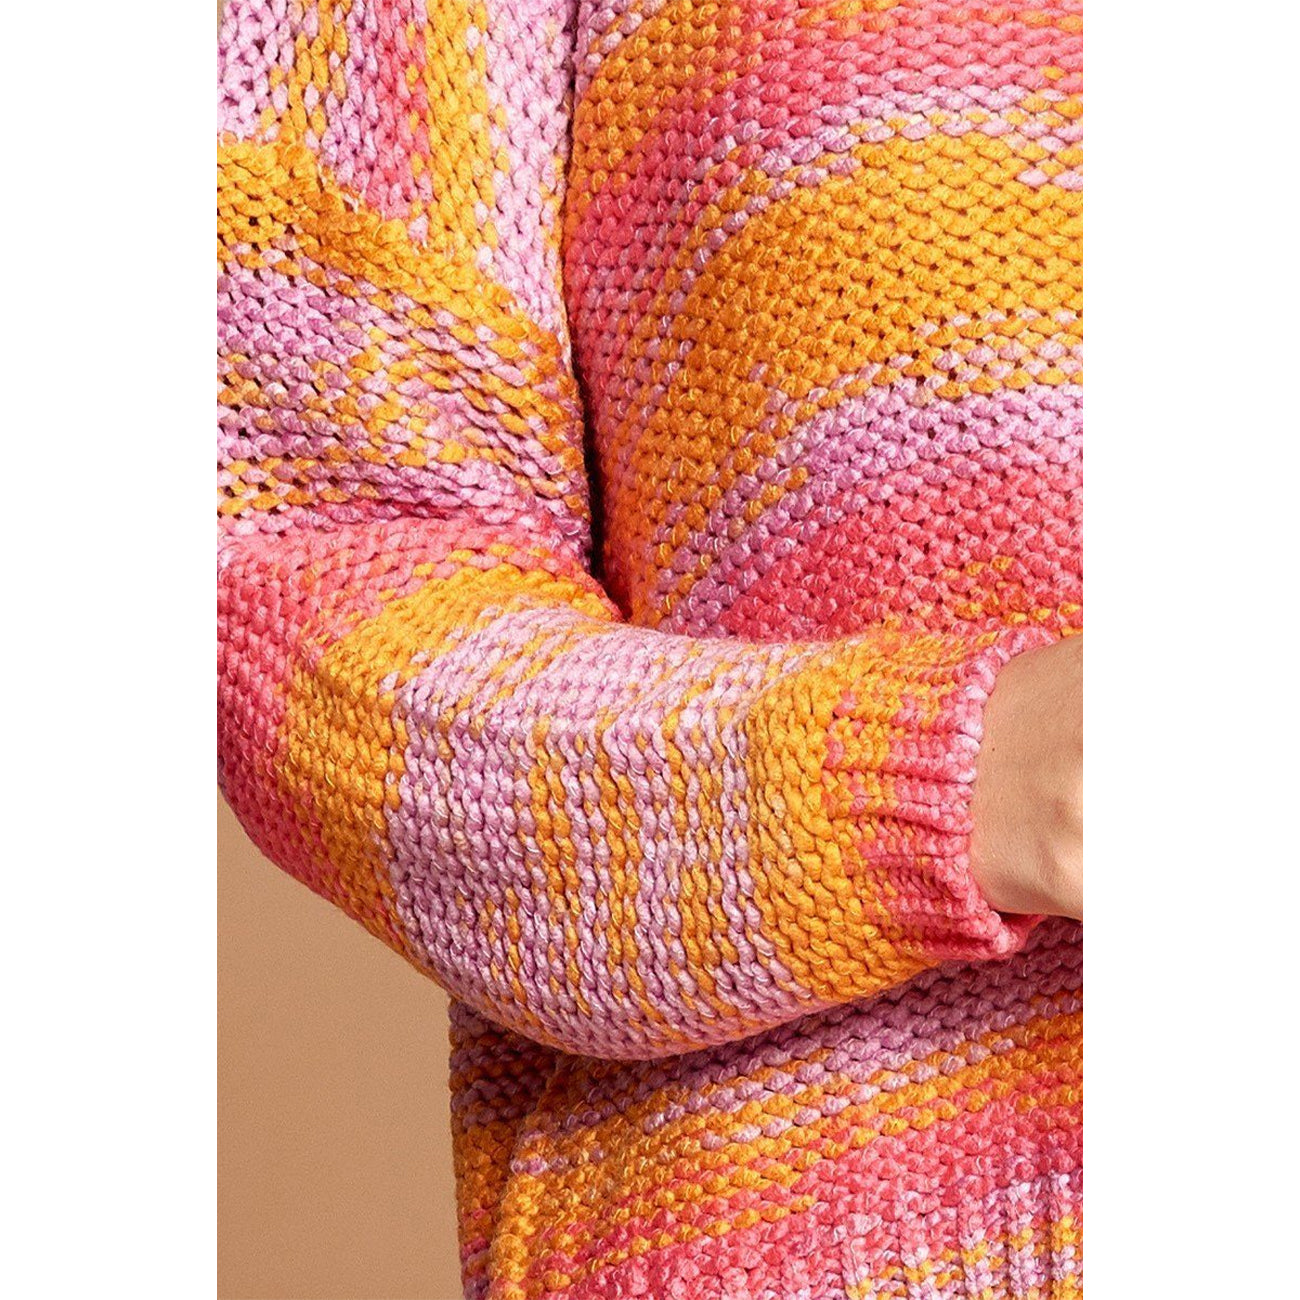 Thread Striped Women's Knit Sweater - Orange & Pink